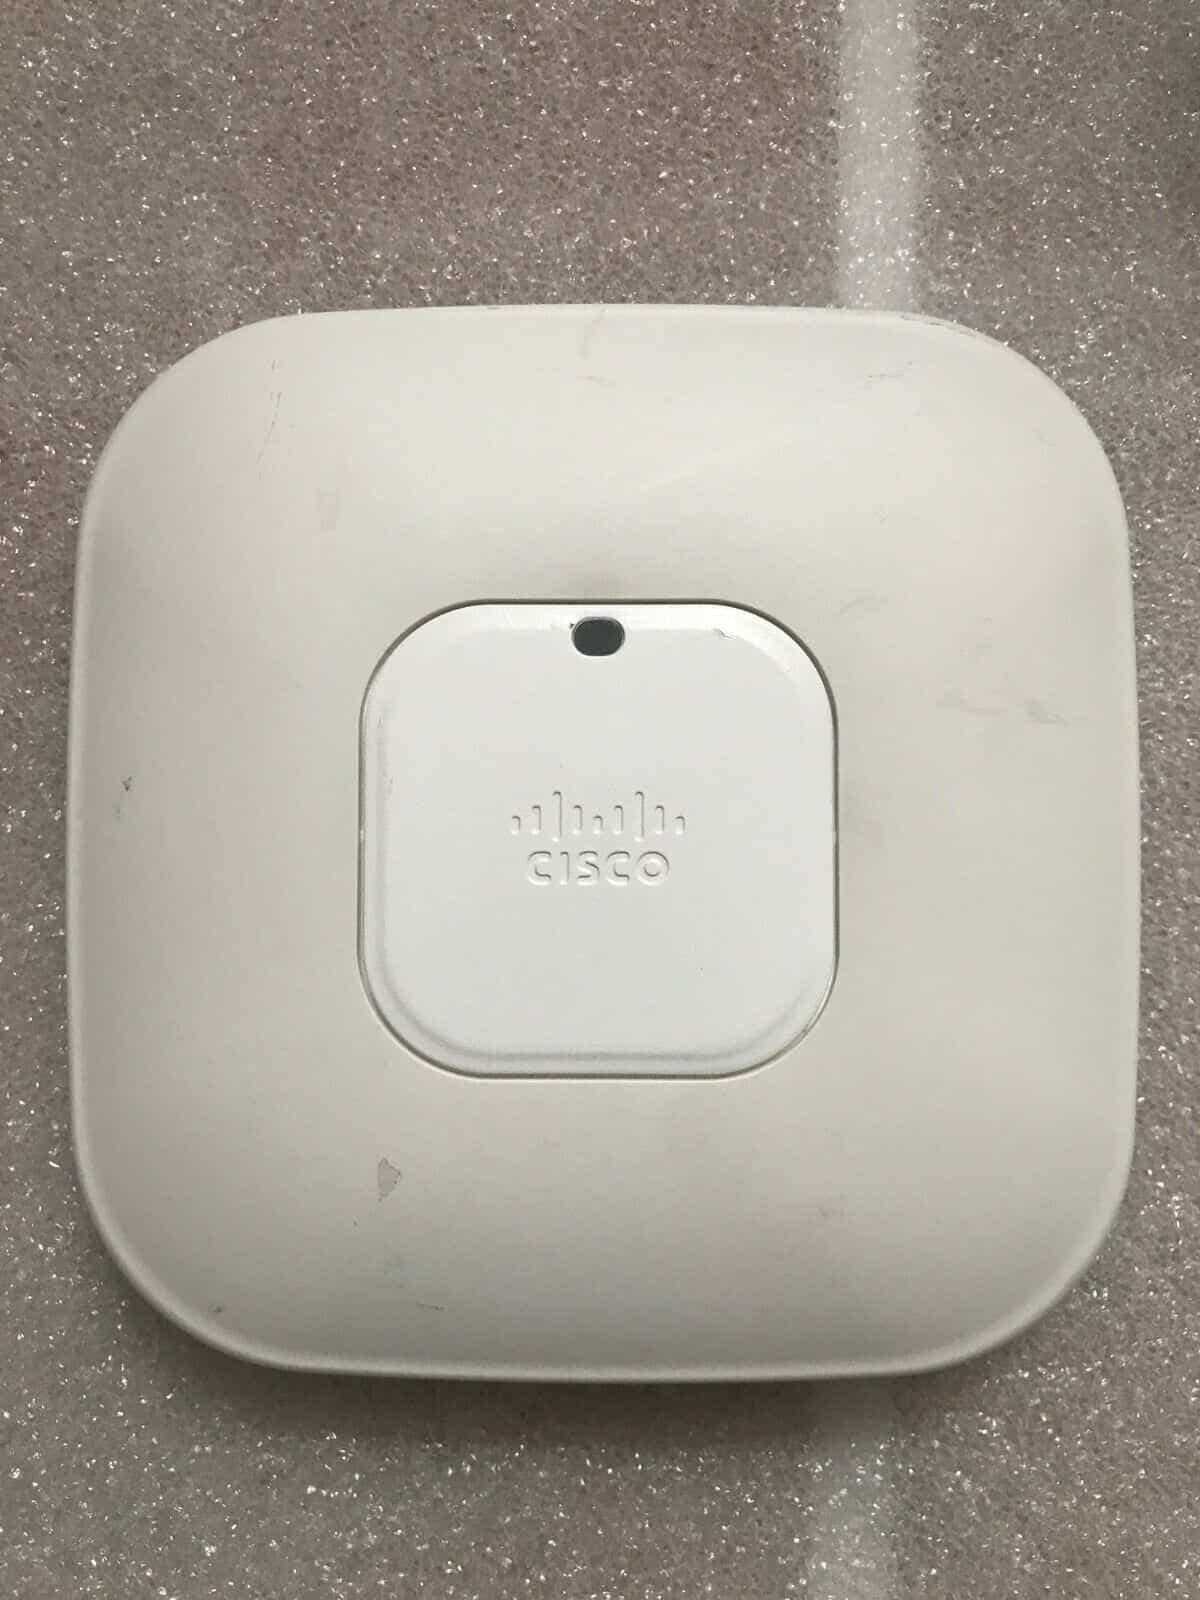 Cisco-AIR-CAP3602I-E-K9-V01-Wireless-Access-Point-3602-Dual-band-80211agn-174843362361.jpg